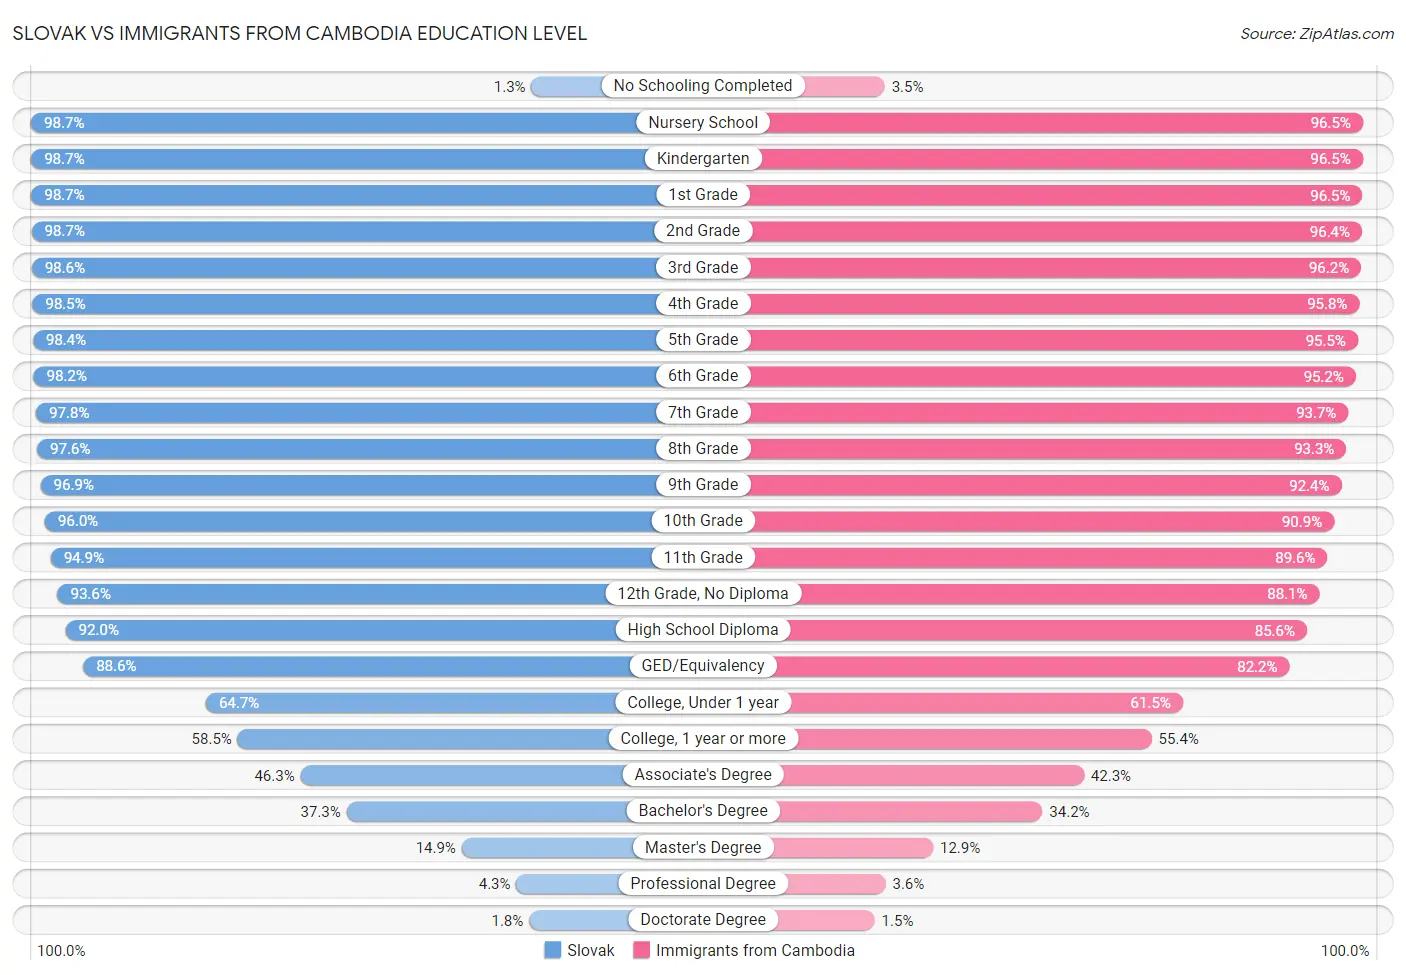 Slovak vs Immigrants from Cambodia Education Level